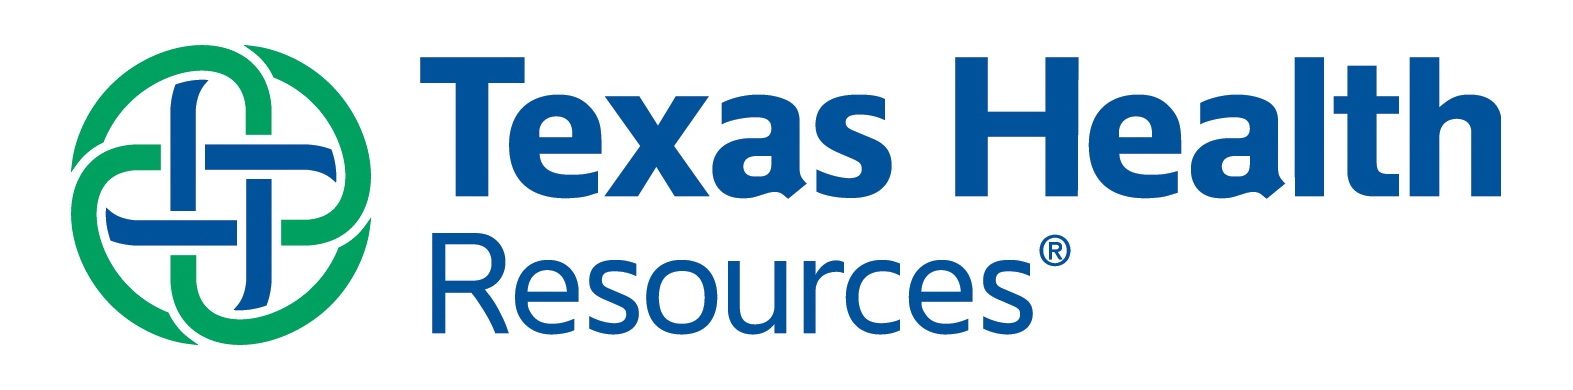 Texas Health Resources Company Logo